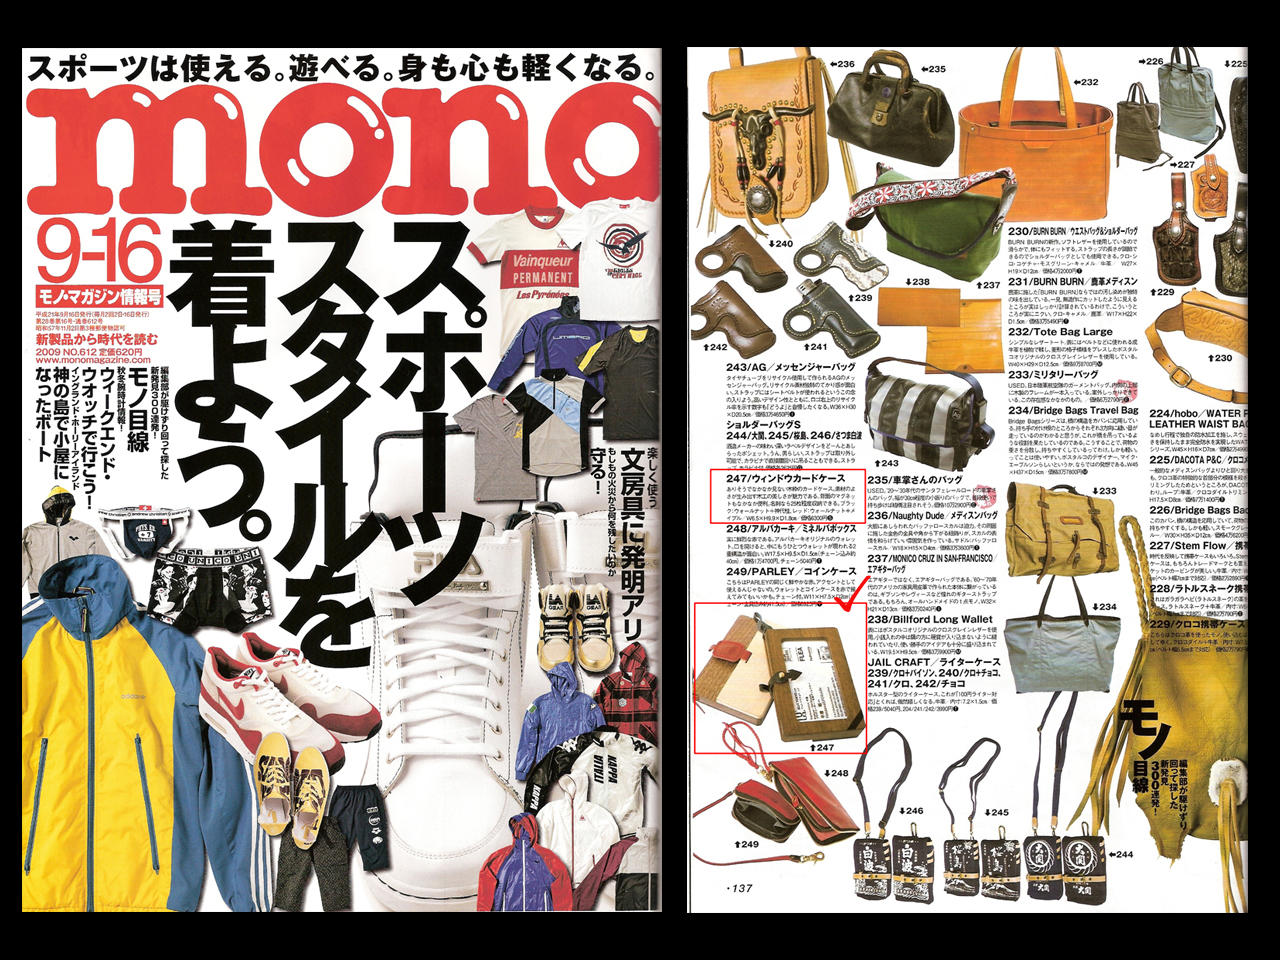 http://alrt.tokyo/news/mono2009_9_1.jpg